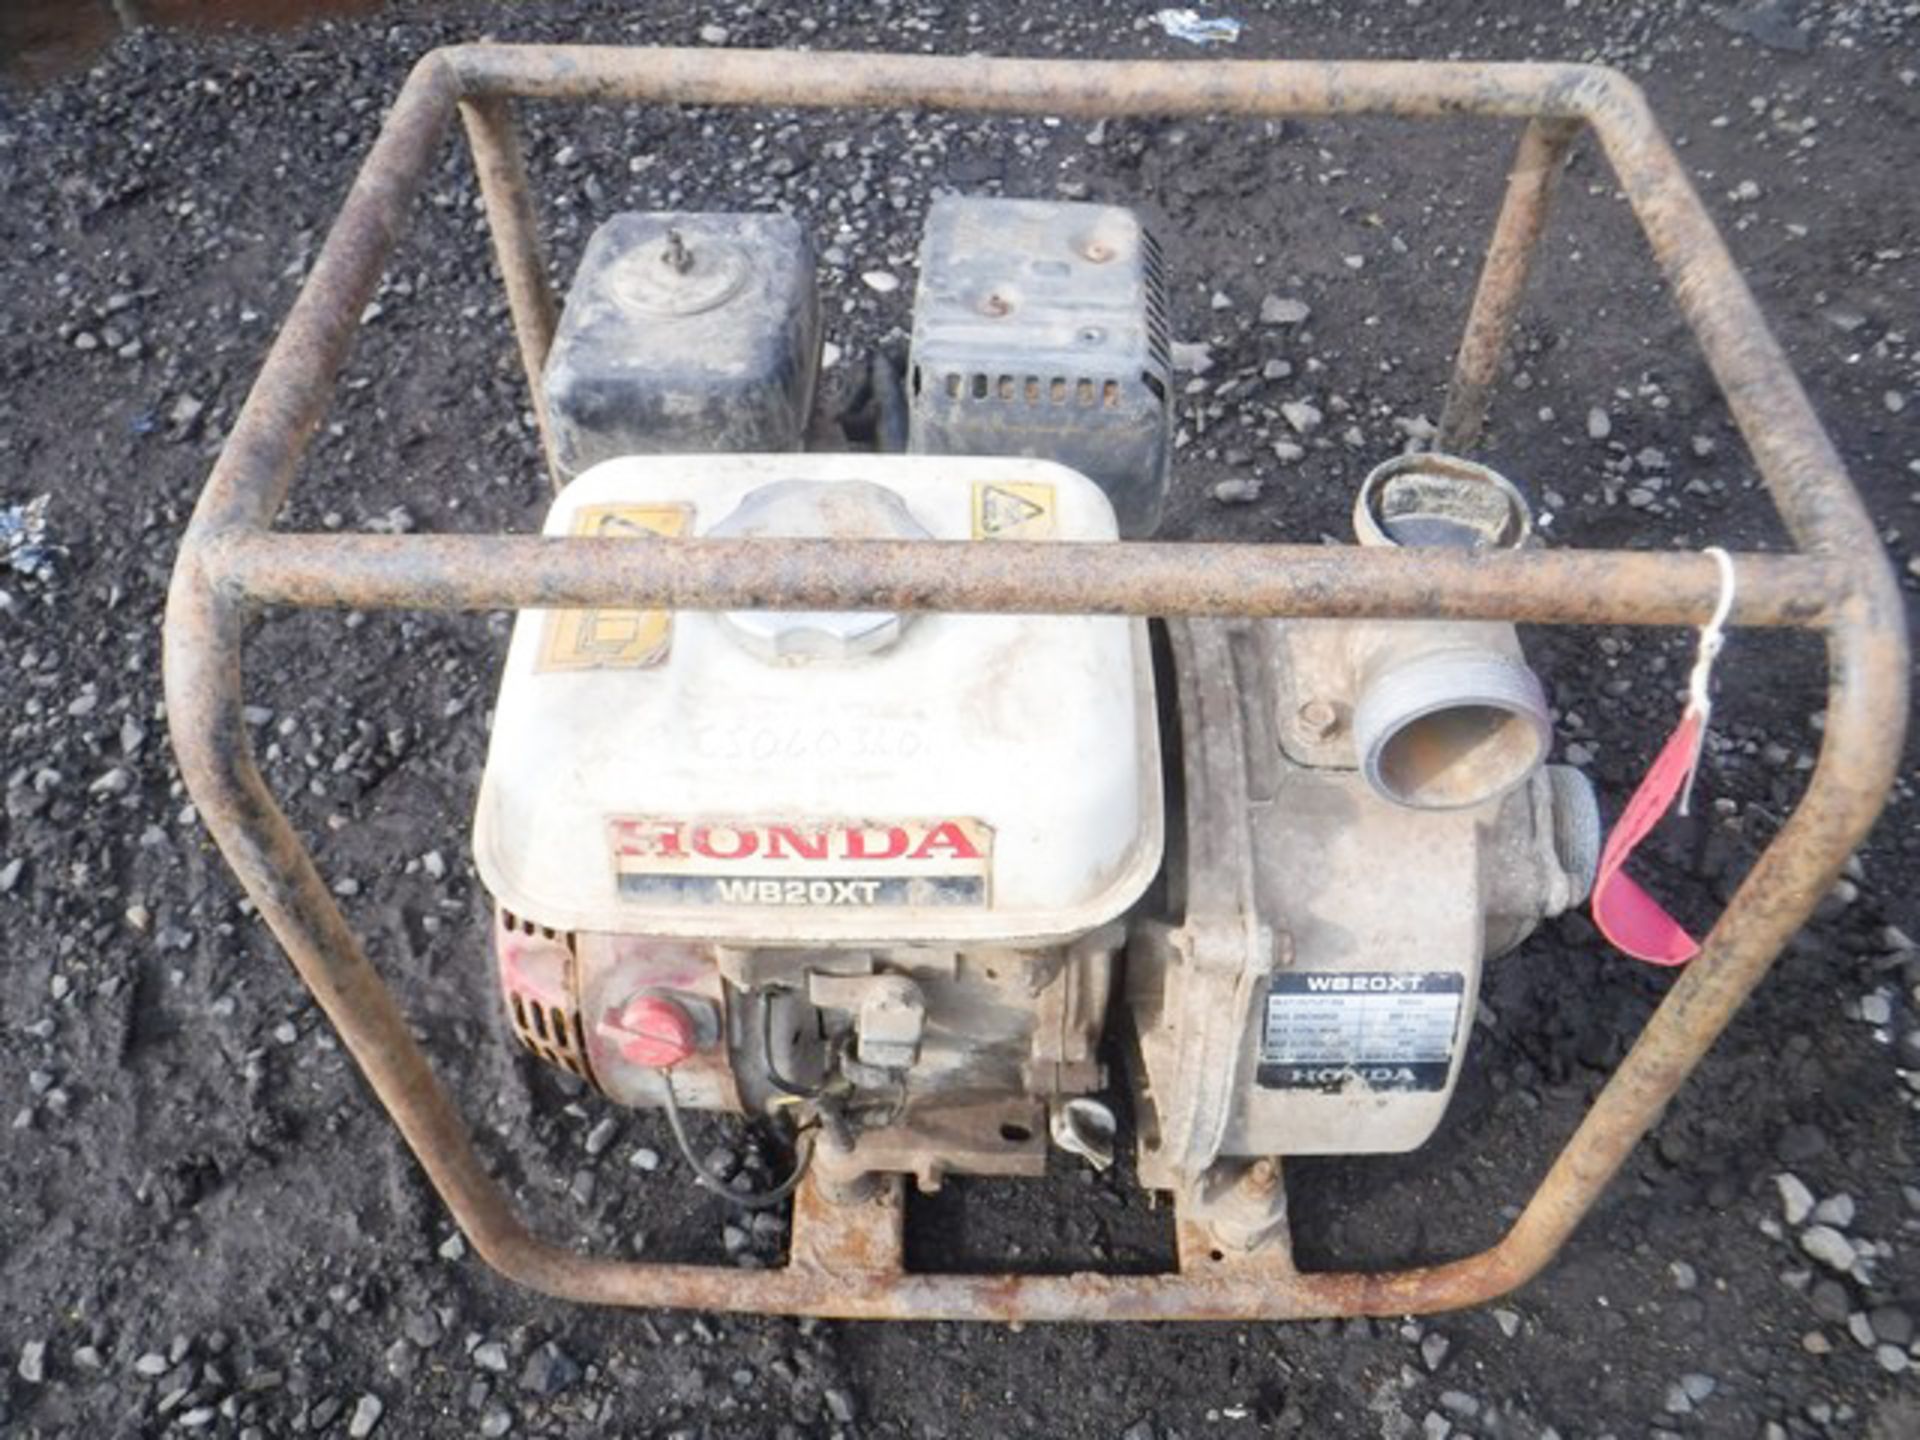 HONDA WT20X water pump. Asset - STJ03C